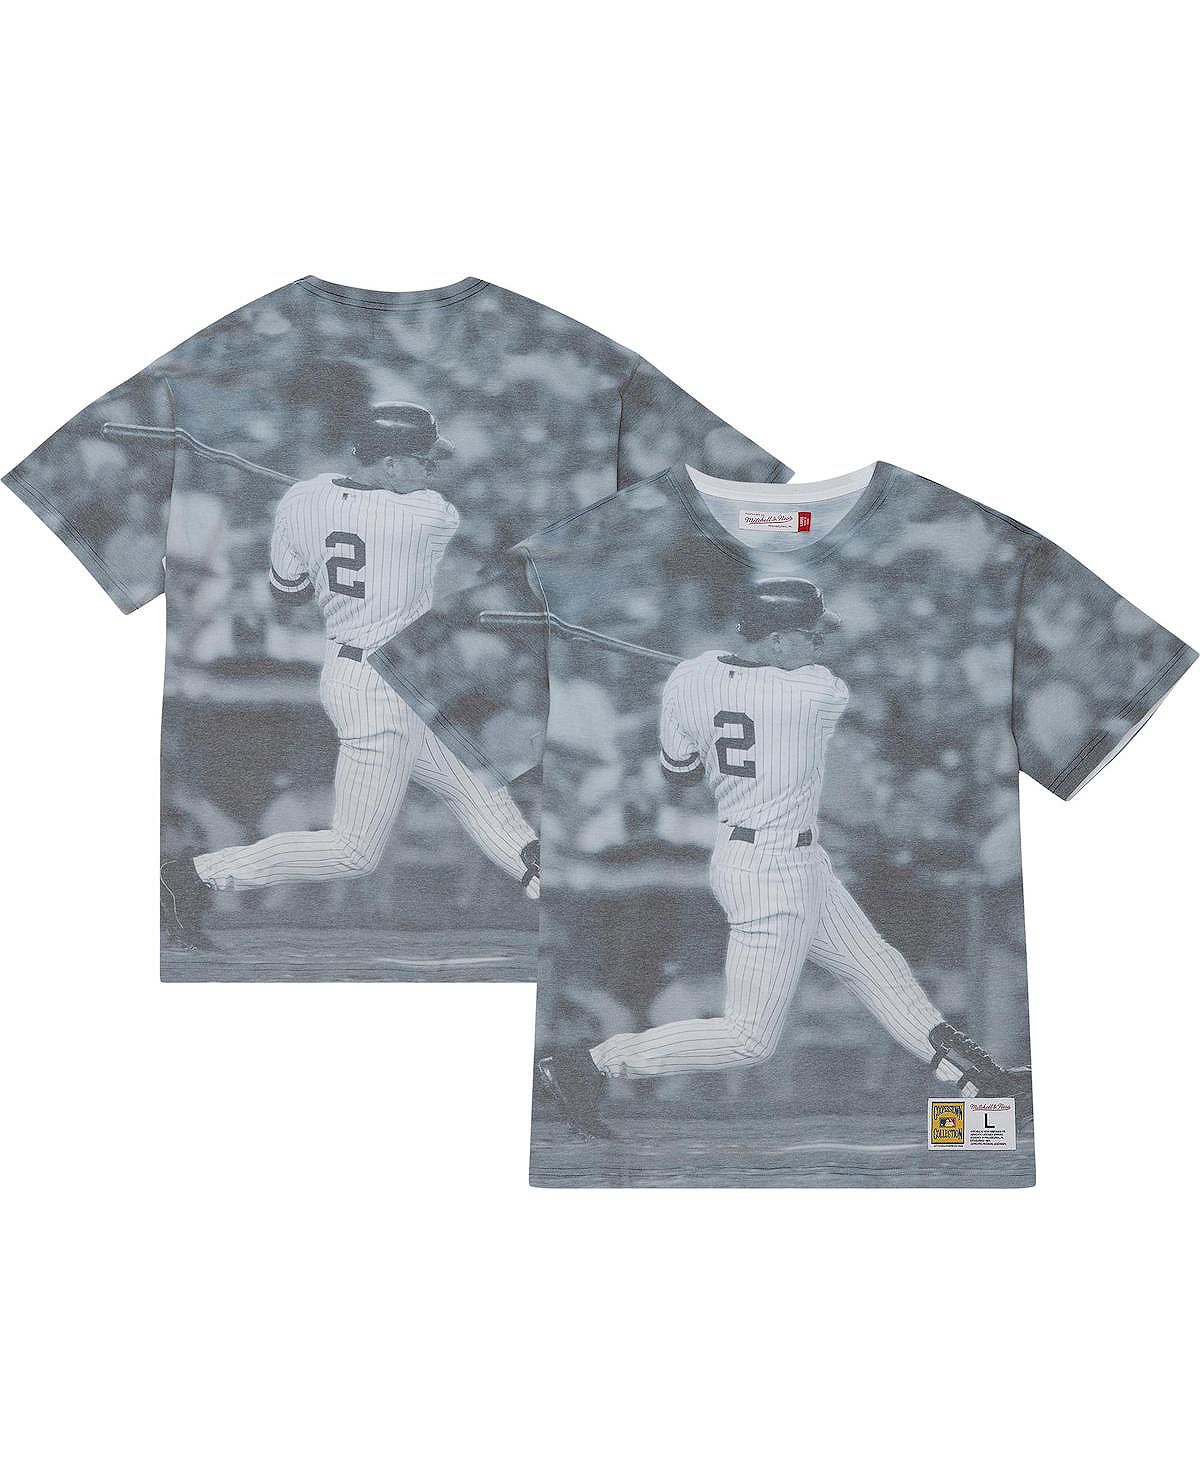 Мужская футболка Derek Jeter New York Yankees Cooperstown Collection с сублимированным рисунком игрока Mitchell & Ness